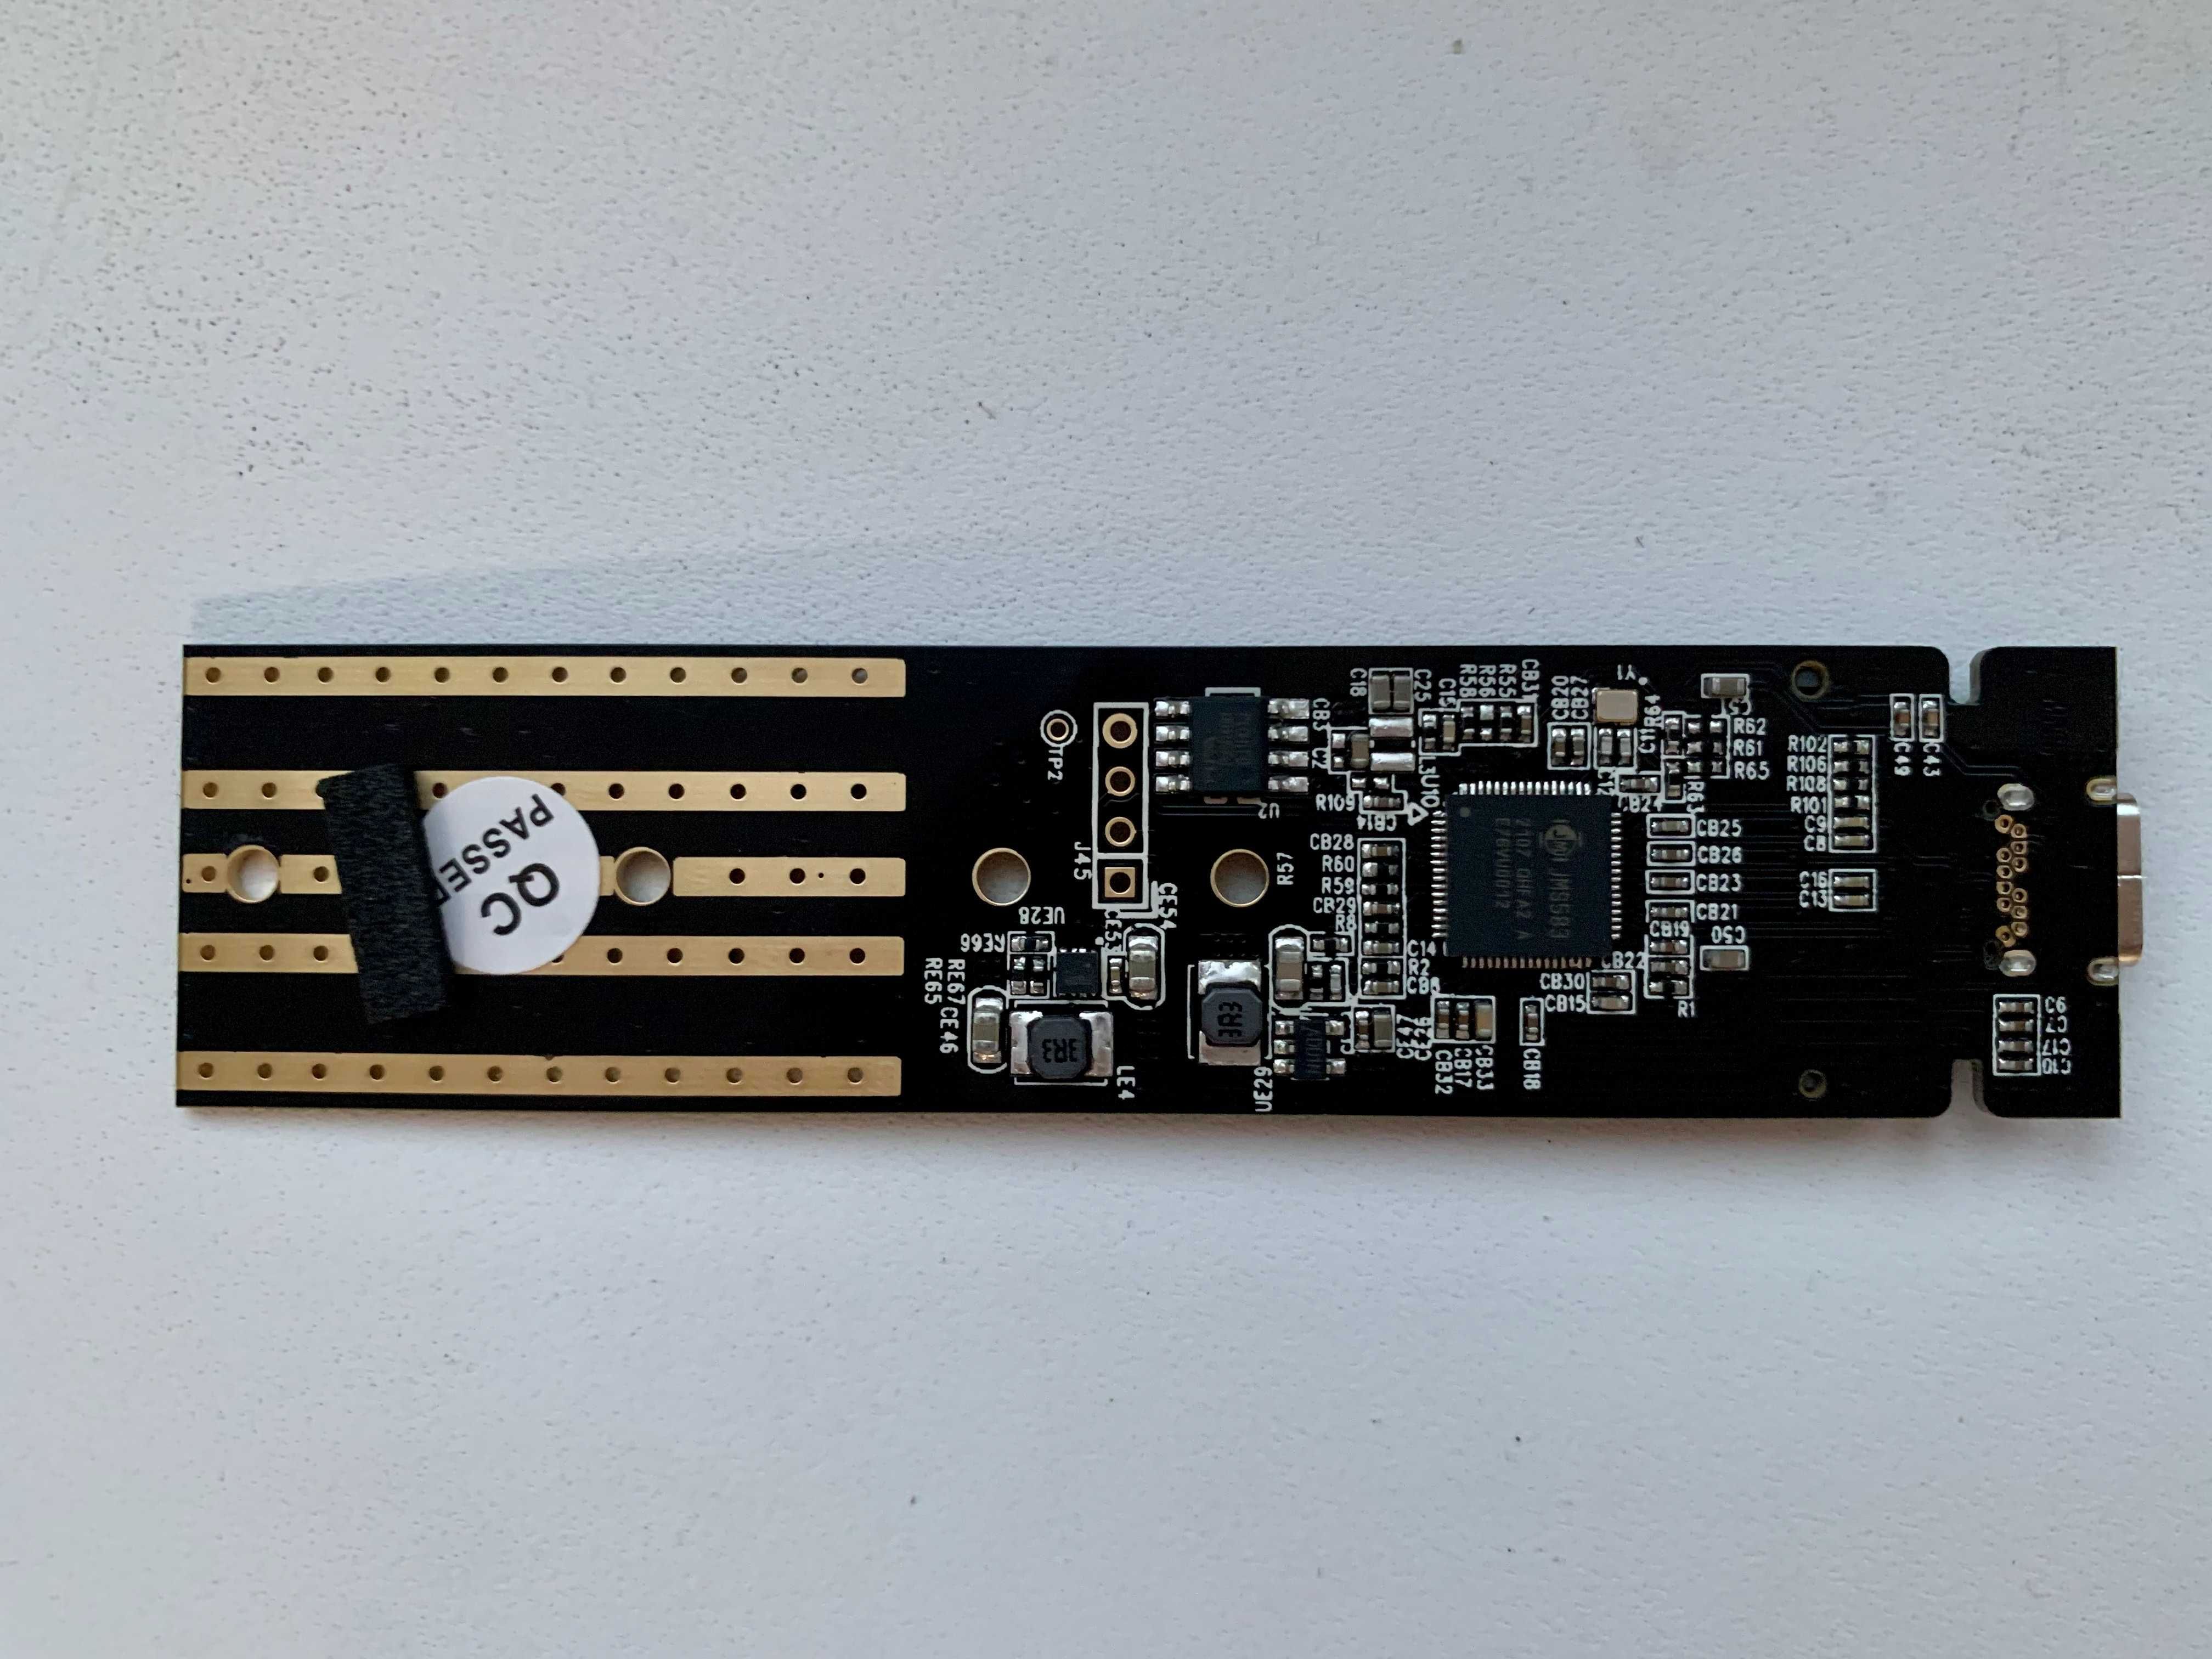 MICRON JMS583 МЕТАЛ Внешний NVMe + Sata карман USB type c M2 3.0 ssd